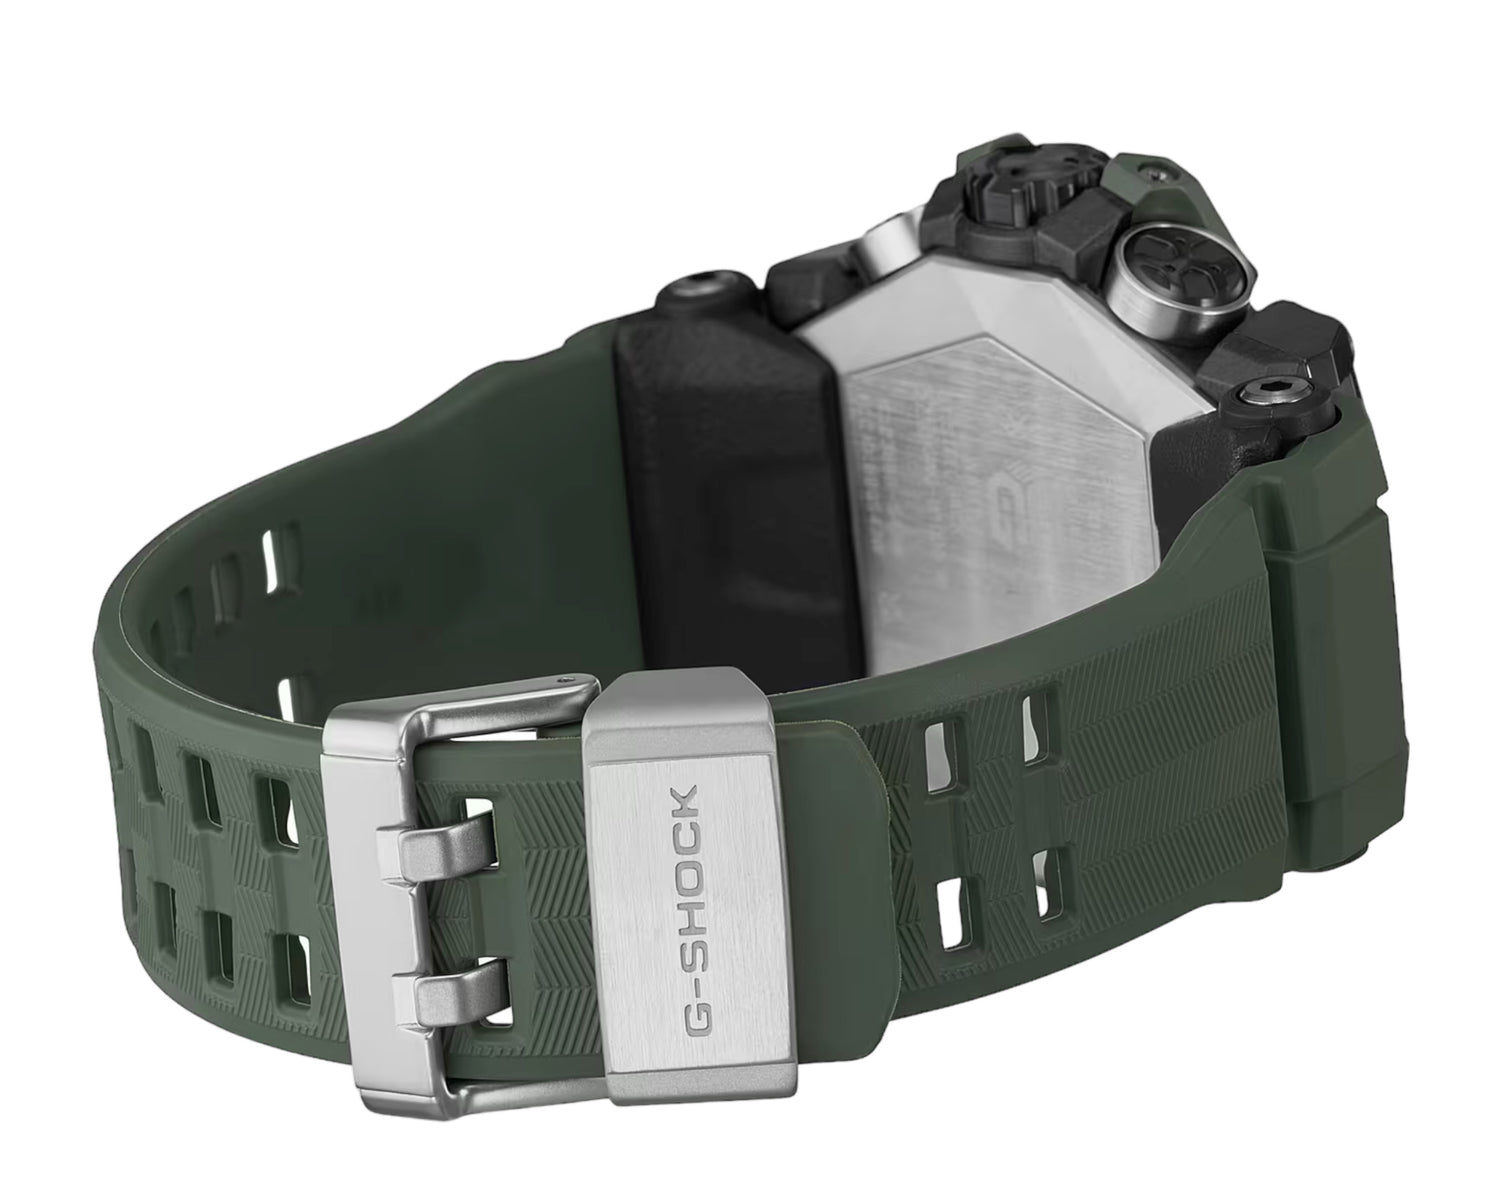 Casio G-Shock GWGB1000 Master of G Mudmaster Analog-Digital Watch